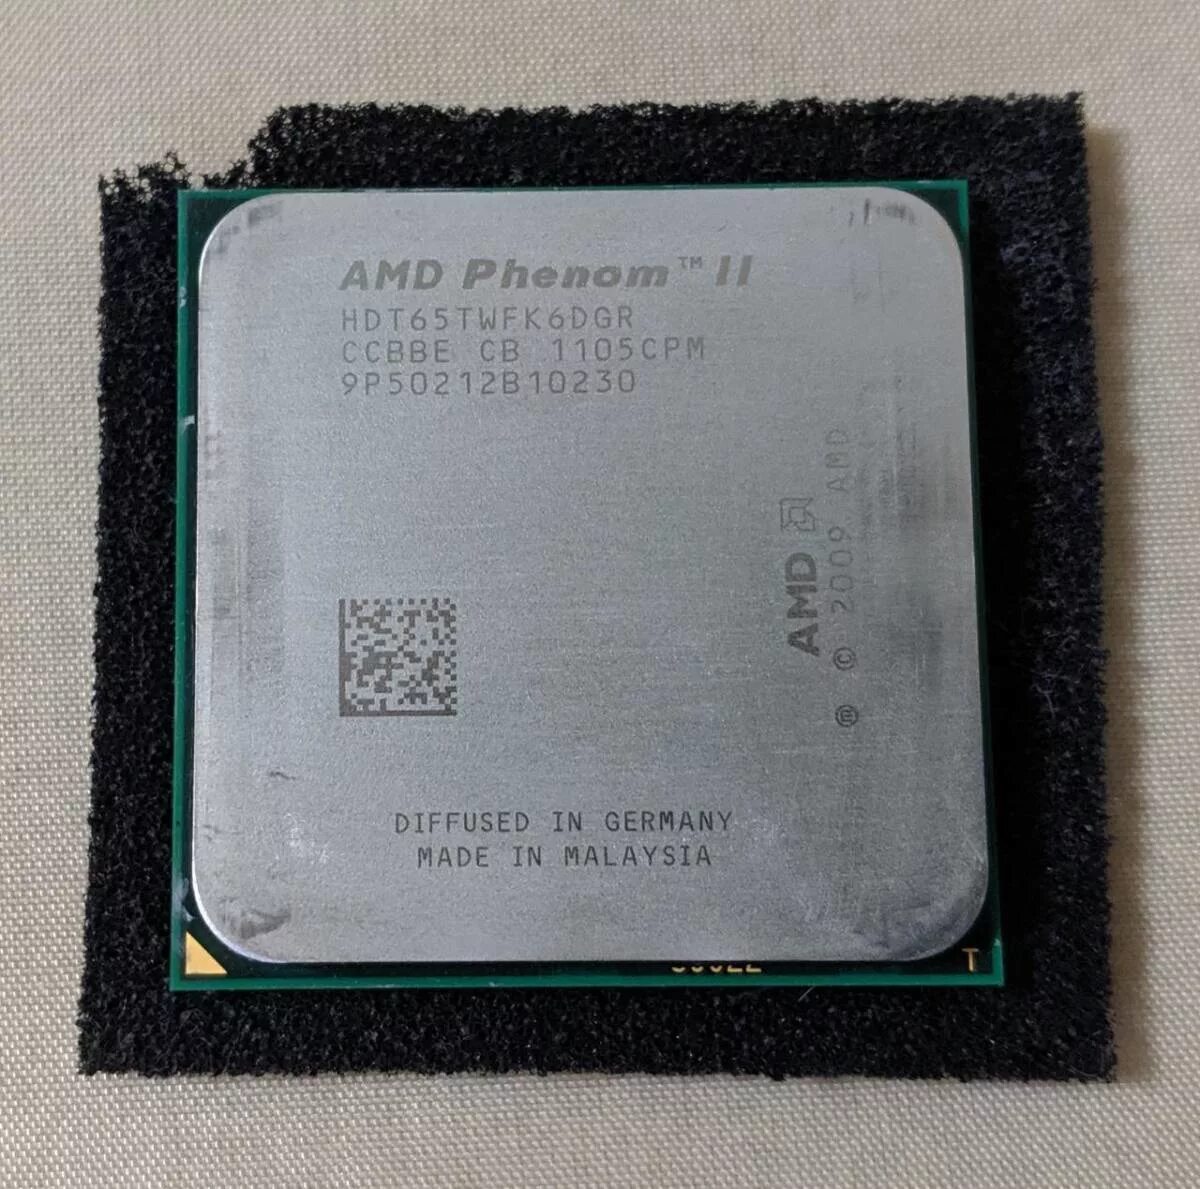 AMD Phenom II x6 1065t. AMD Phenom 2 hdt65twfk6dgr. AMD Phenom TM II x6 1065t Processor 2.90 GHZ. AMD Phenom II x6 1065t 6 ядер.